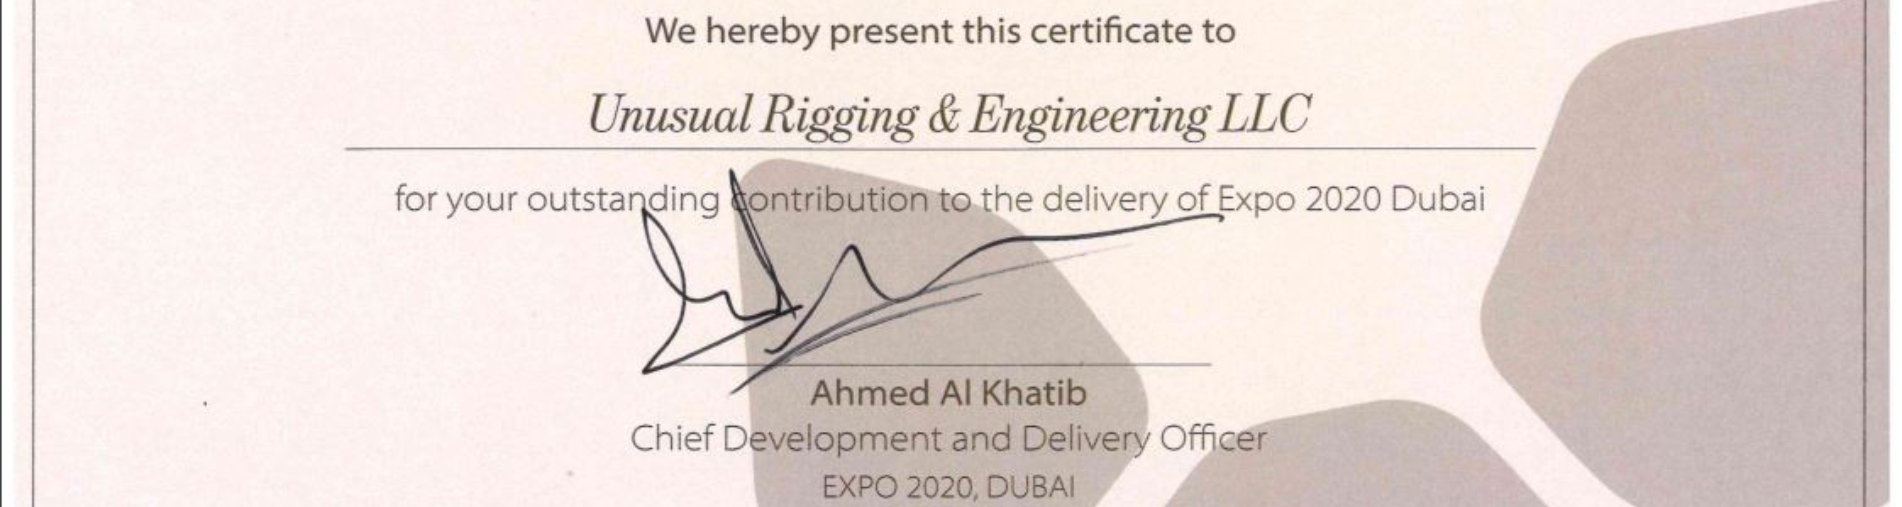 Unusual Rigging& Engineering wins EXPO 2020 Dubai Suppliers Awards!